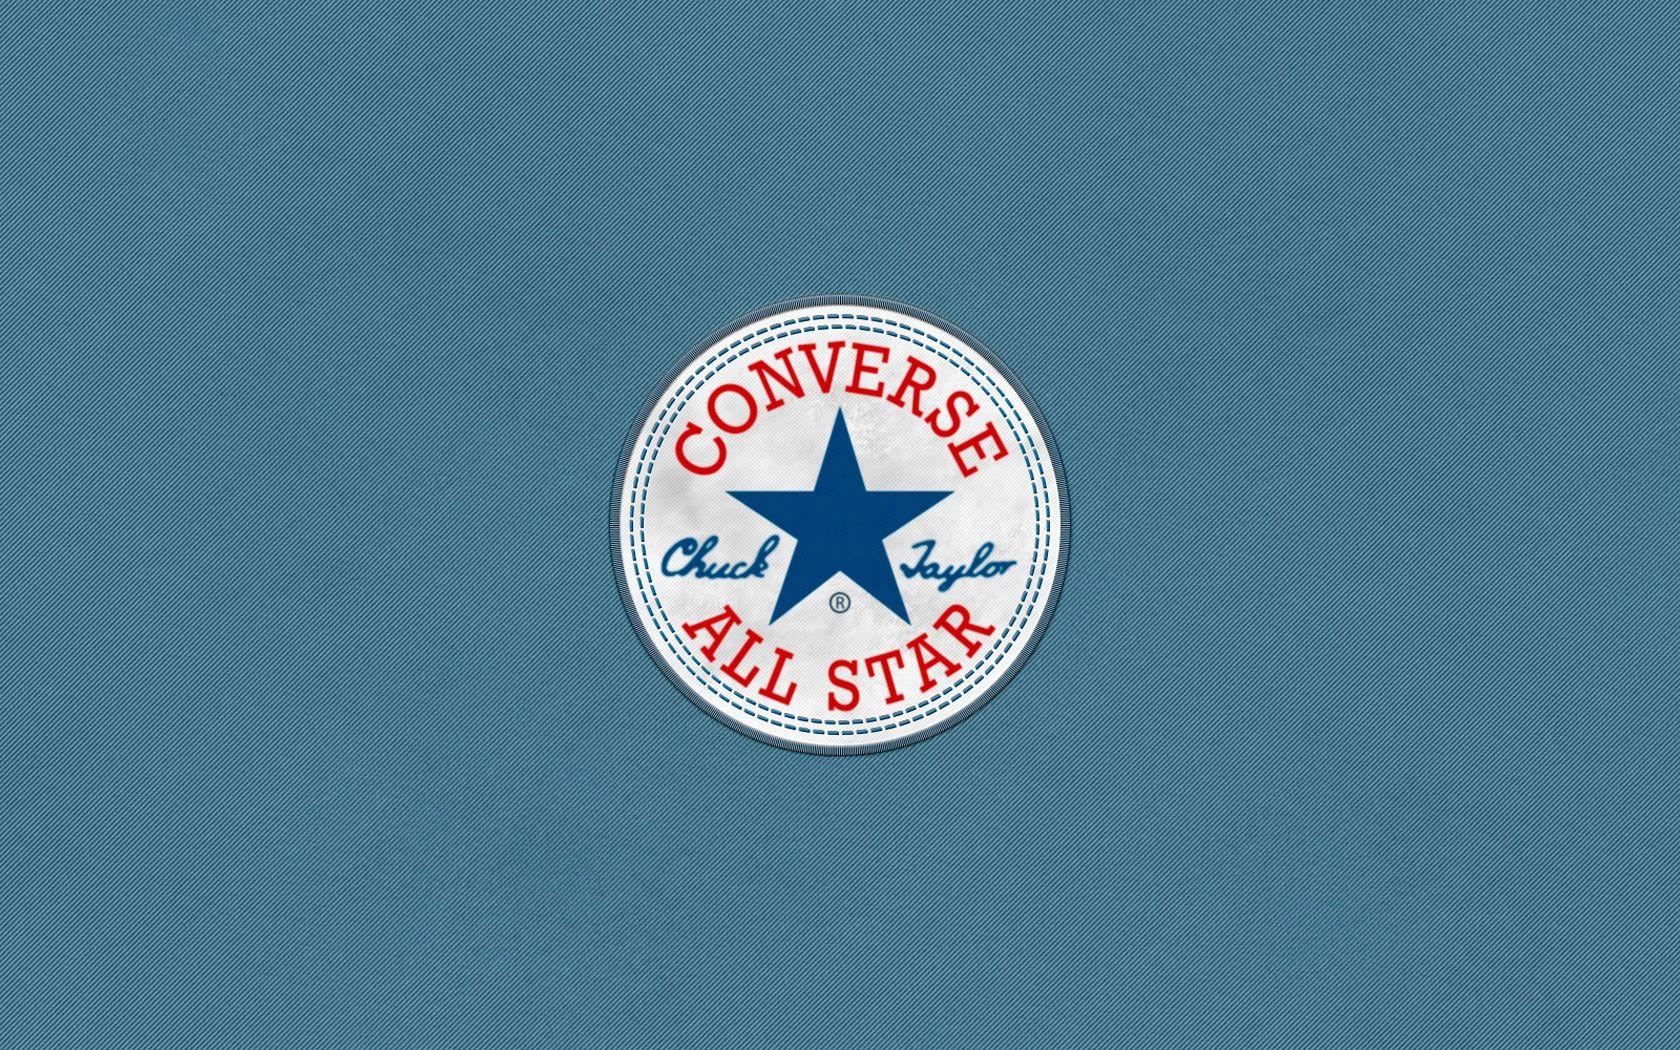 Converse Logo Wallpaper 17059 1680x1050 px